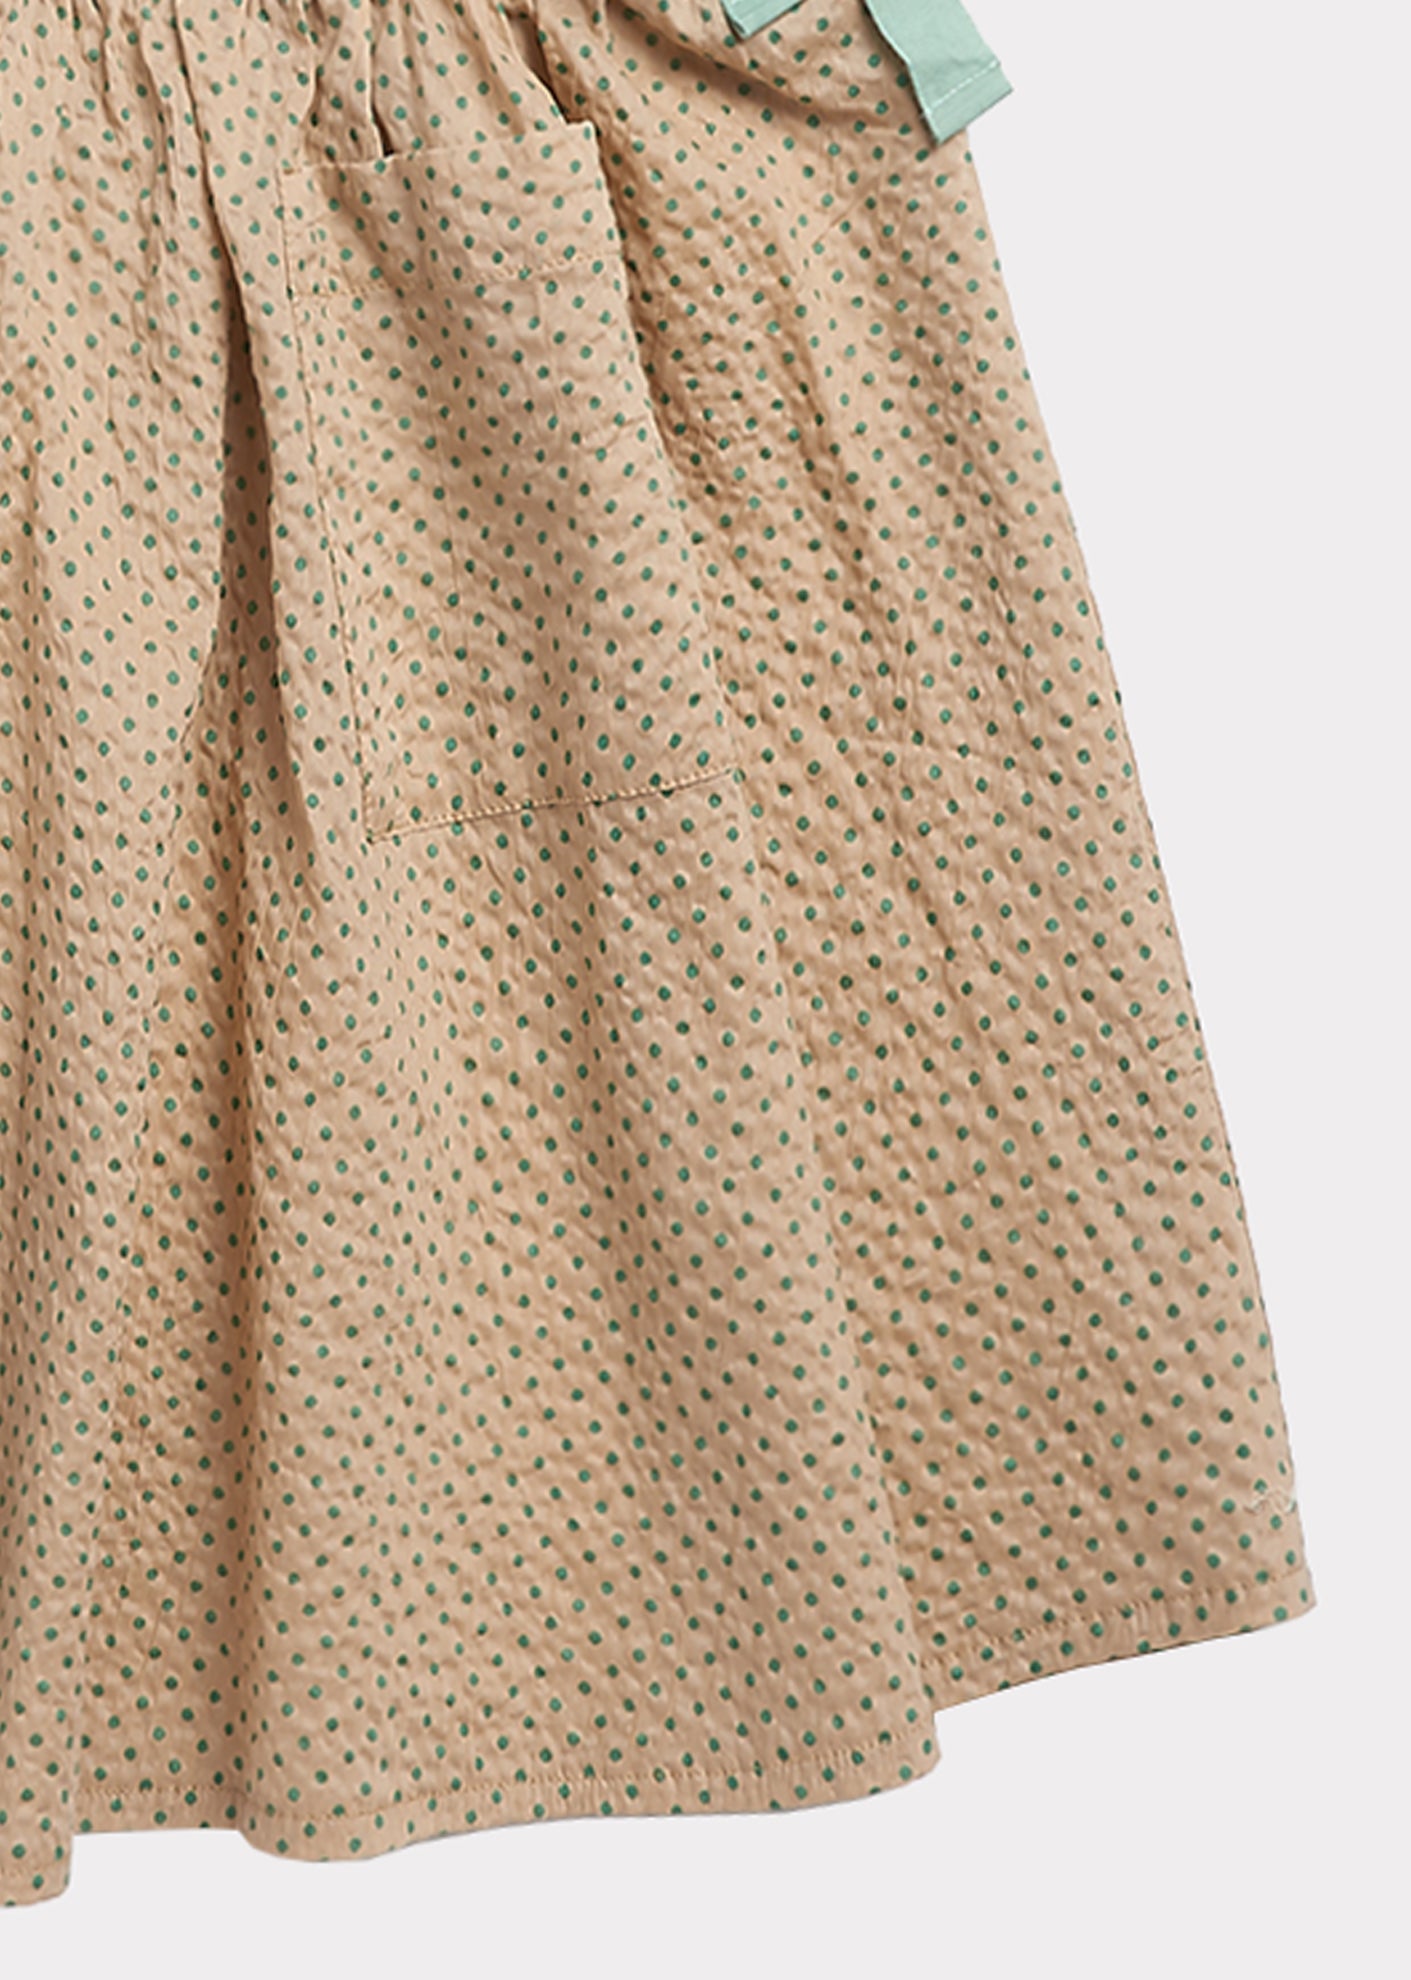 Girls Khaki & Green Polka Dots Cotton Skirt